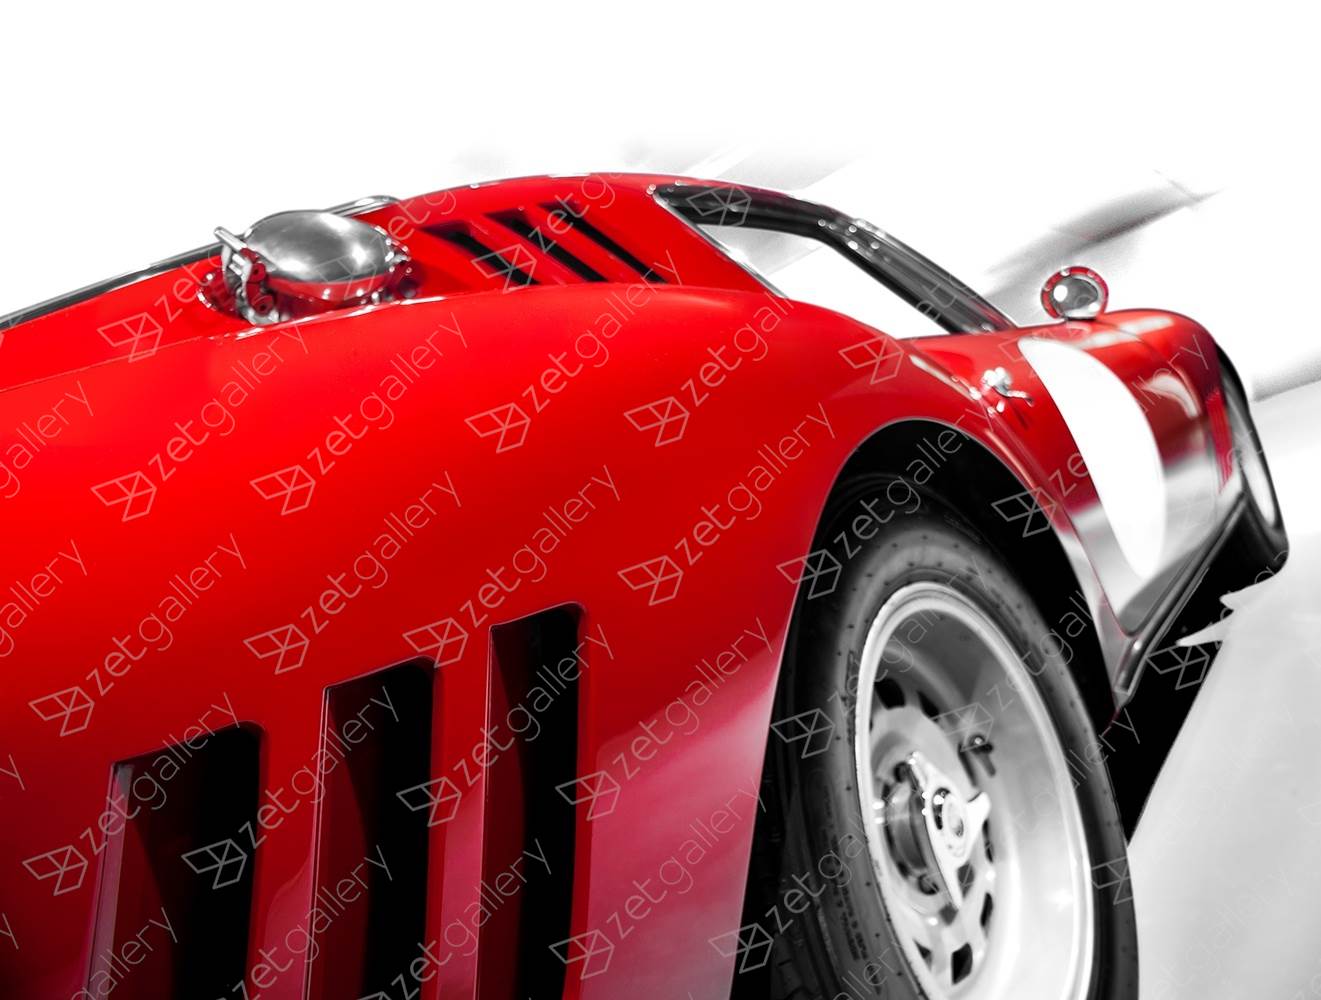 Ferrari GTB Competizione 02, original Avant-Garde Digital Photography by Yggdrasil Art